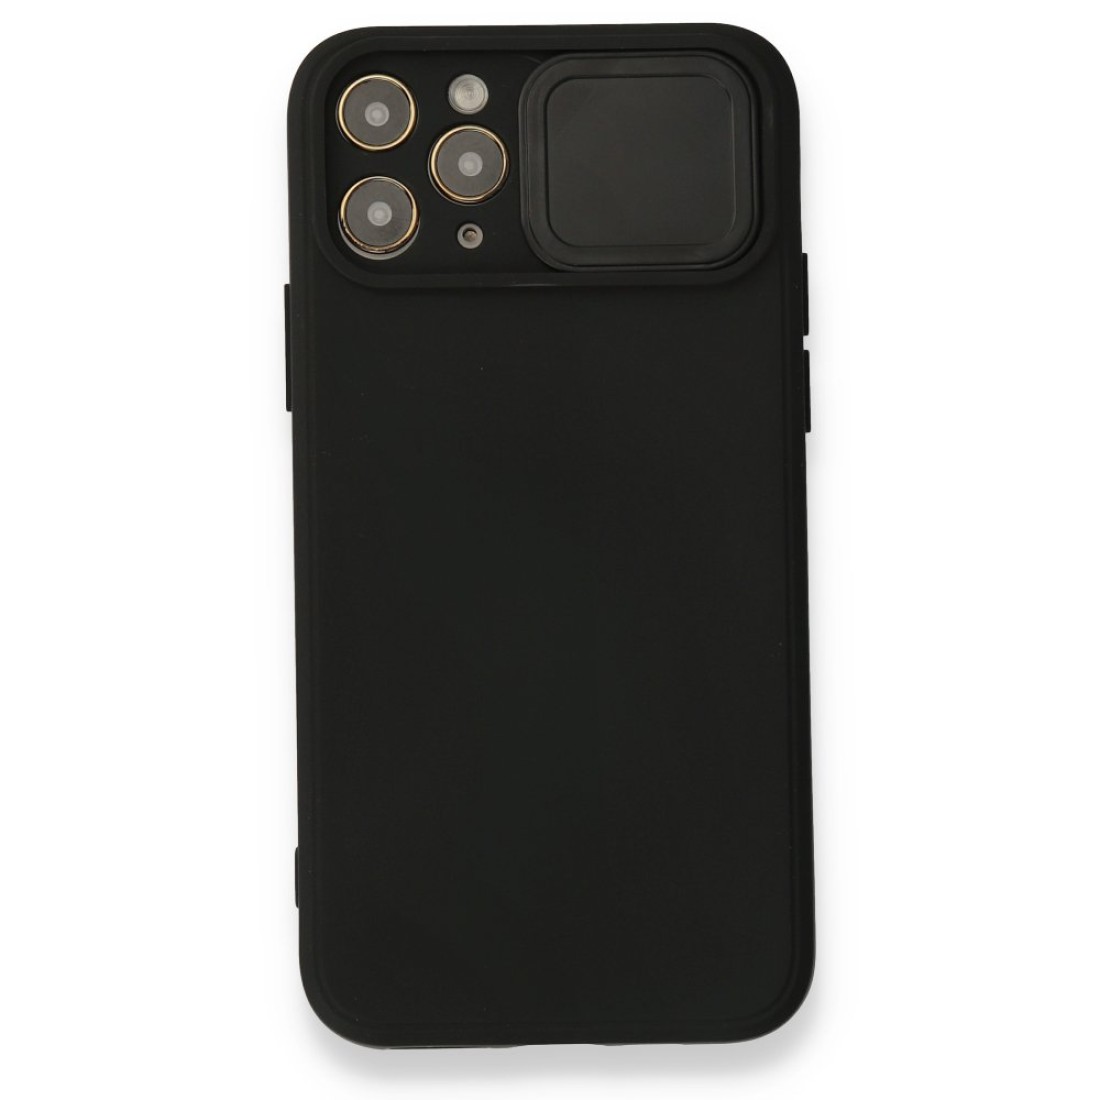 Apple iPhone 11 Pro Max Kılıf Color Lens Silikon - Siyah